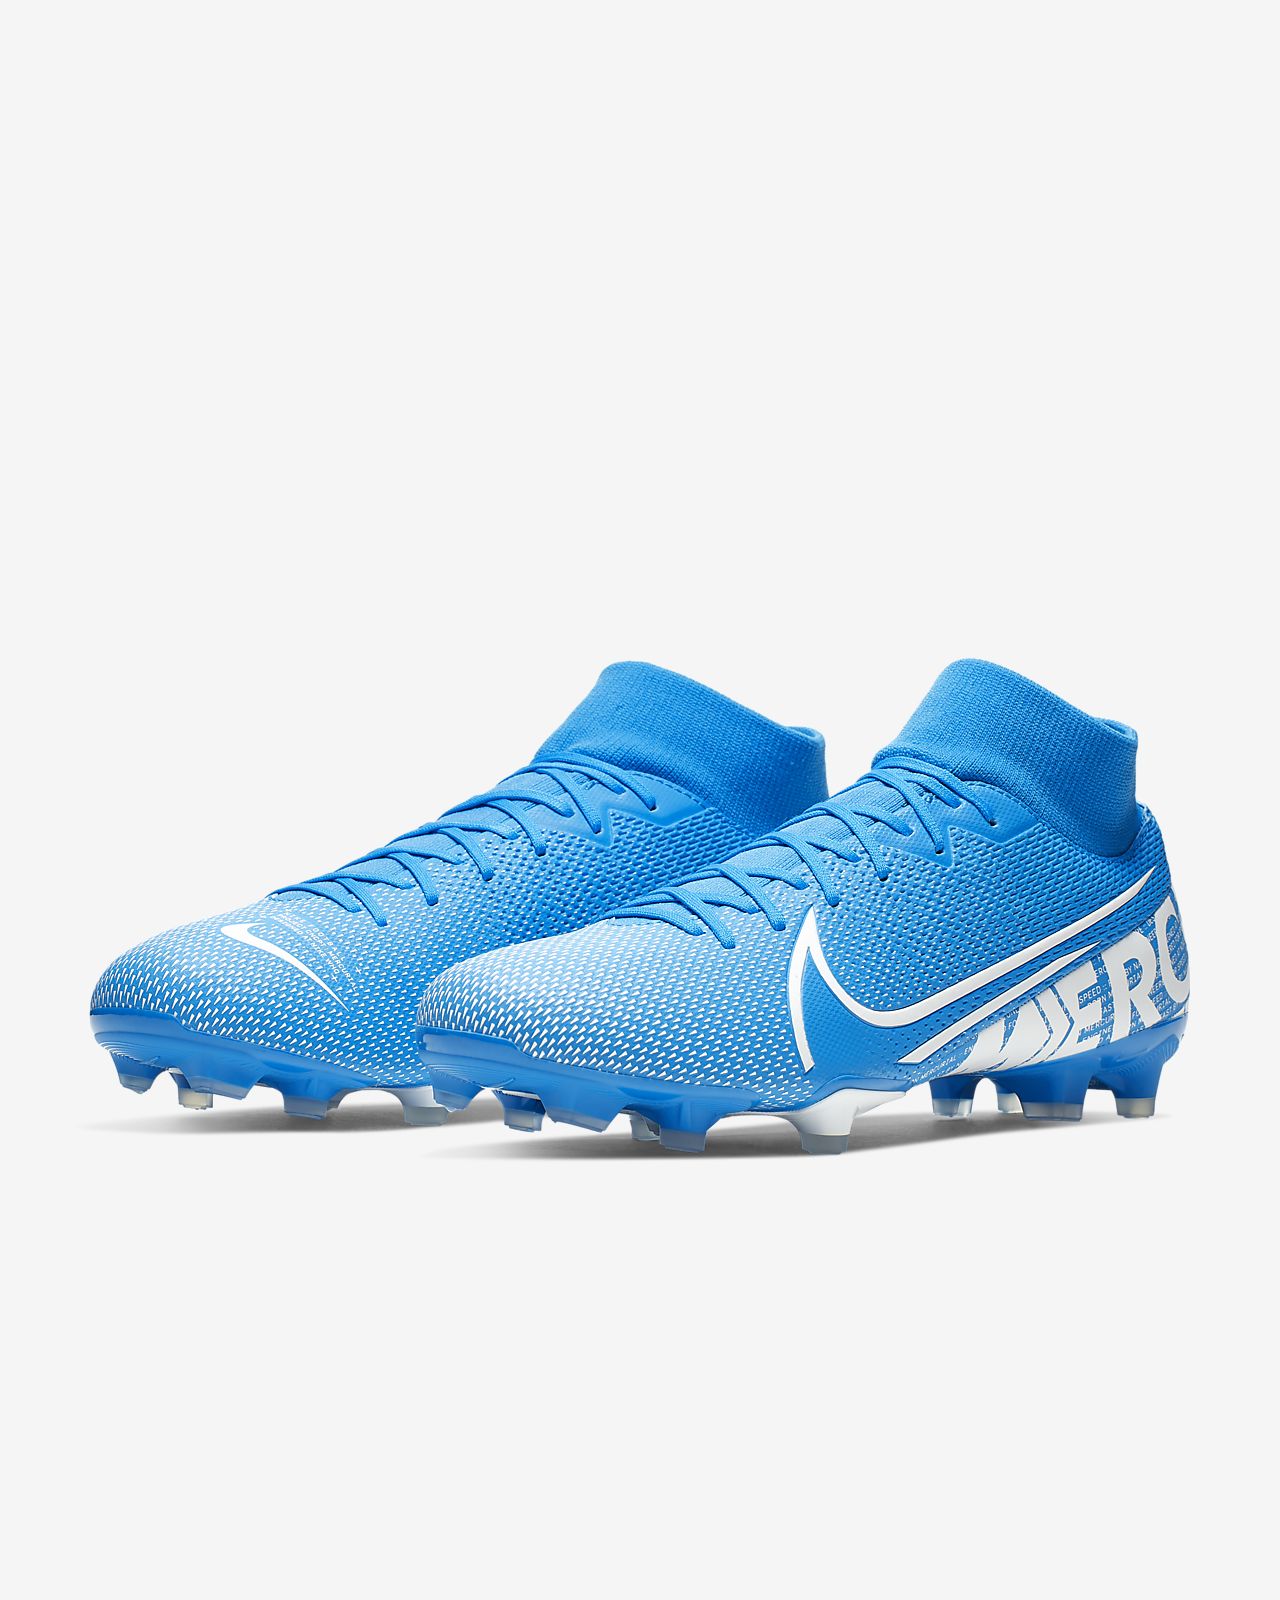 Nike Mercurial Superfly 7 Elite Futsal Blue Original Football Boots